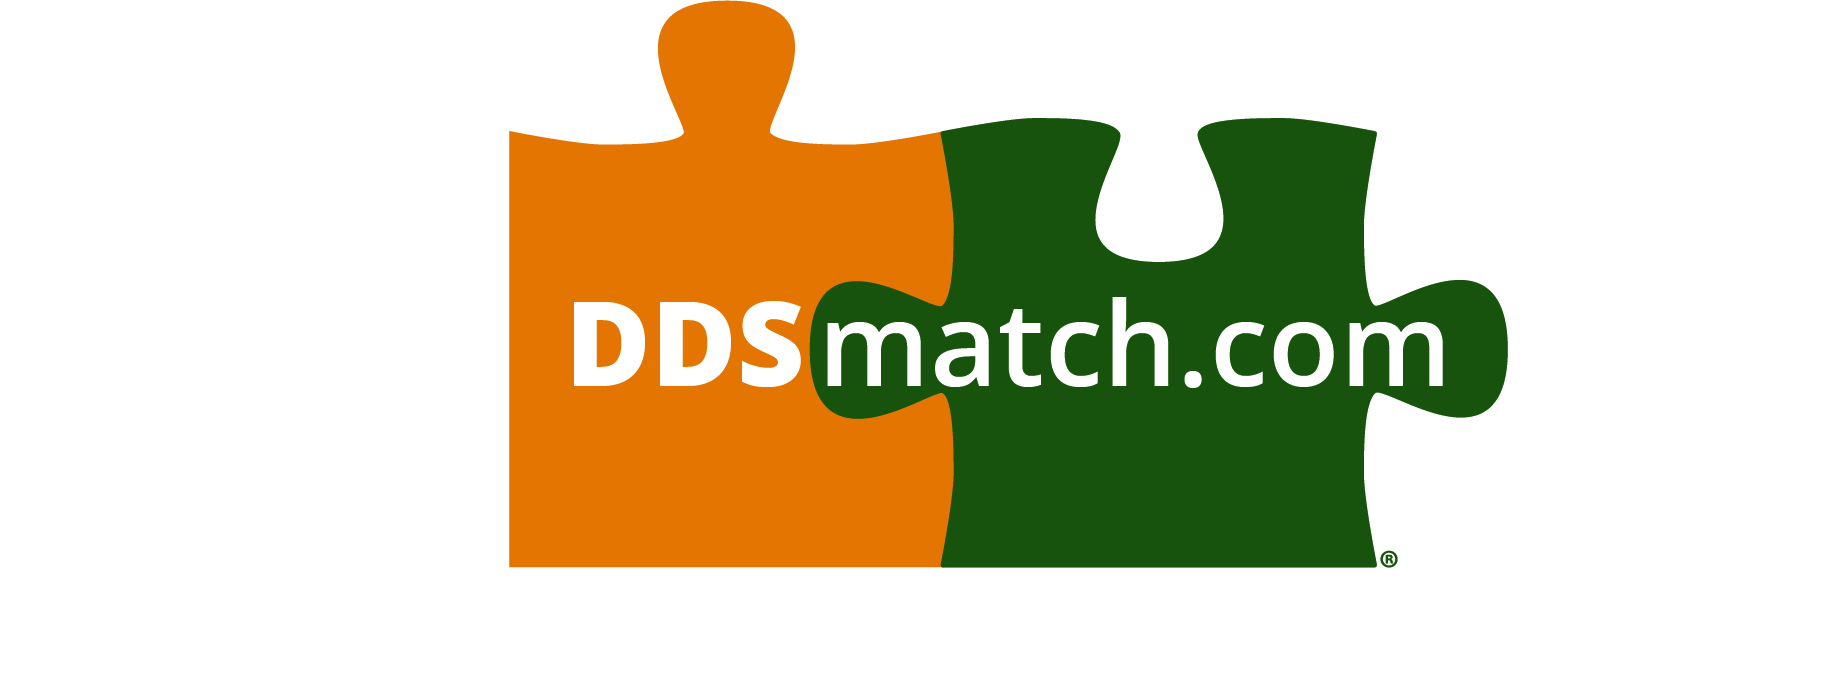 ddsmatch.com - Tim O'Shaughnessy Logo